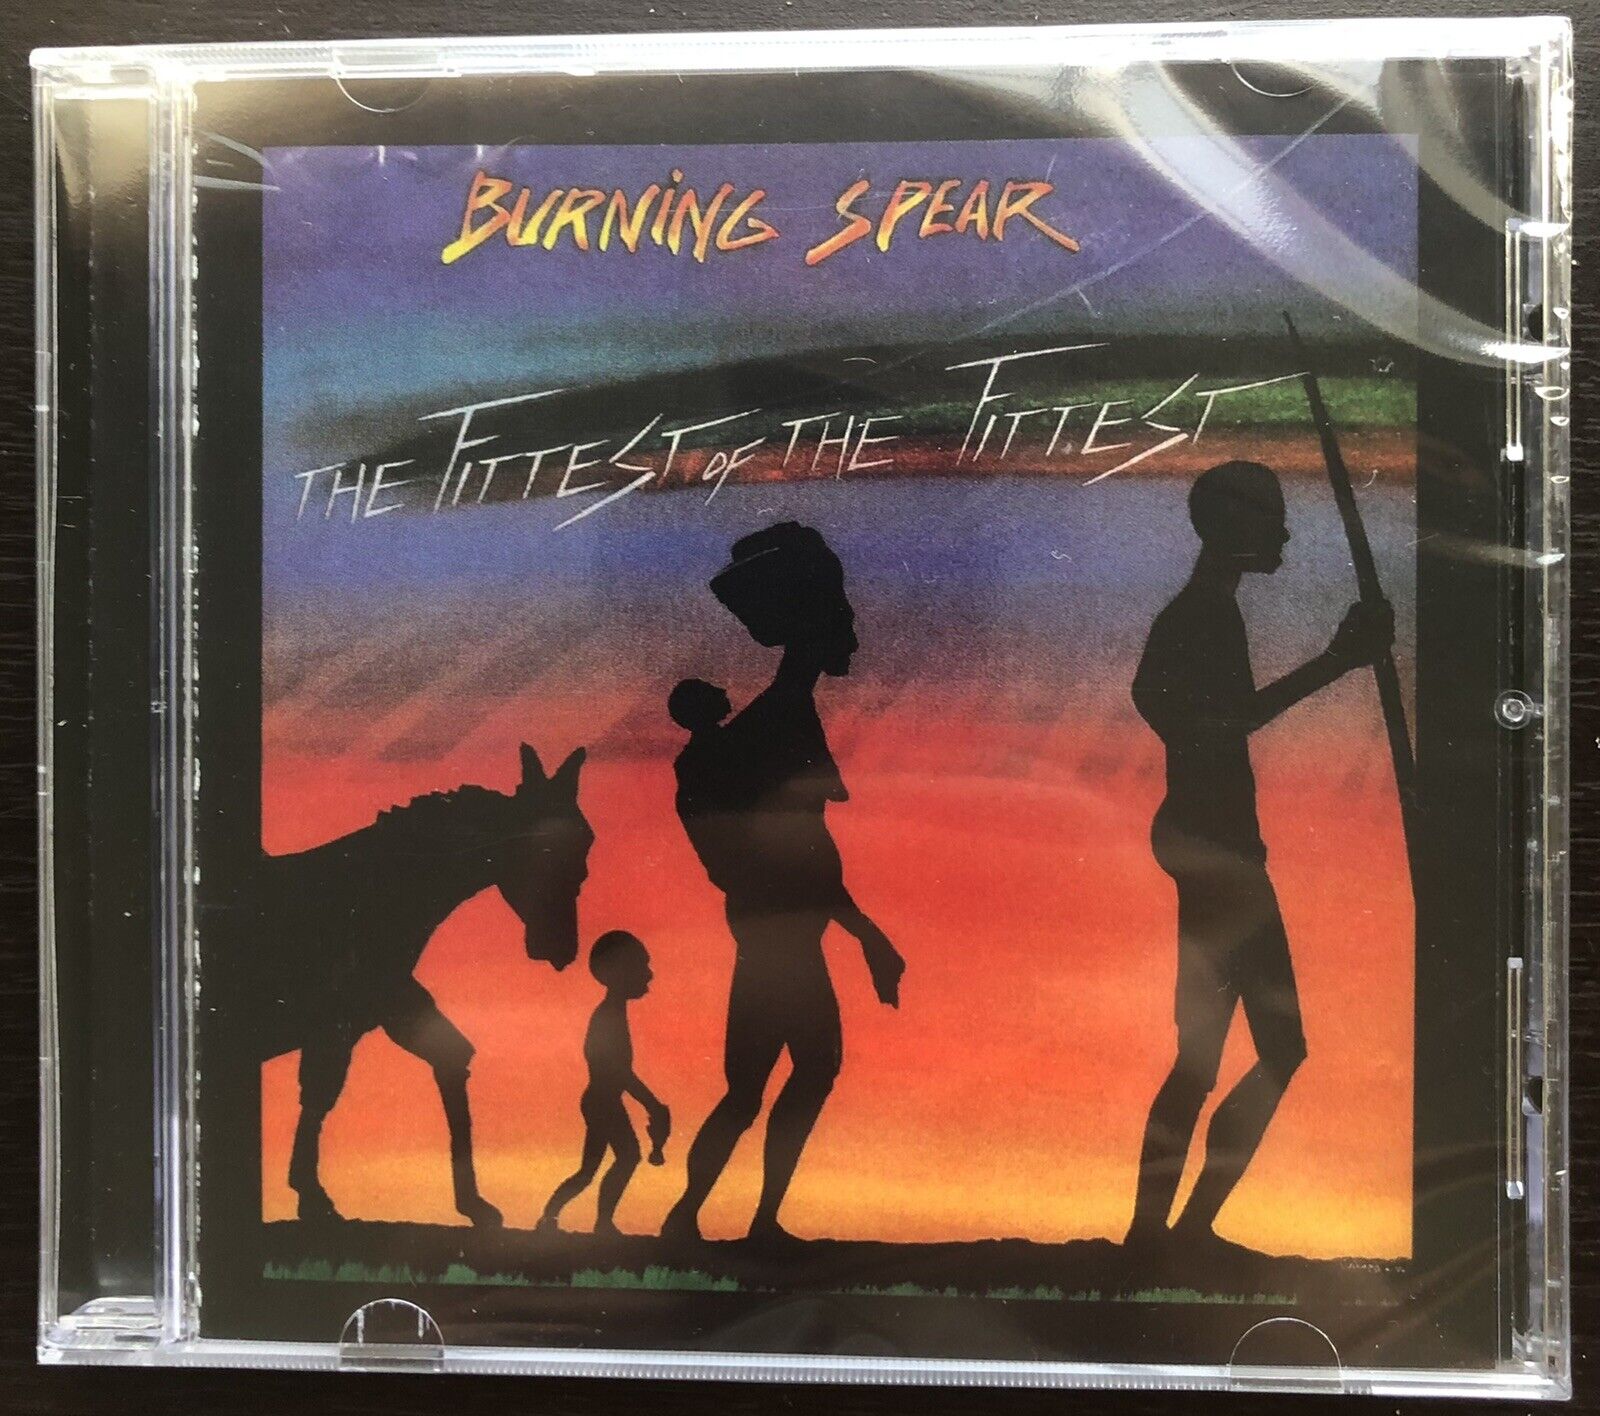 Burning Spear 'The Fittest Of The Fittest’ CD Roots Reggae NEW Sealed Fast Ship! Tania okazja, WYPRZEDAŻ